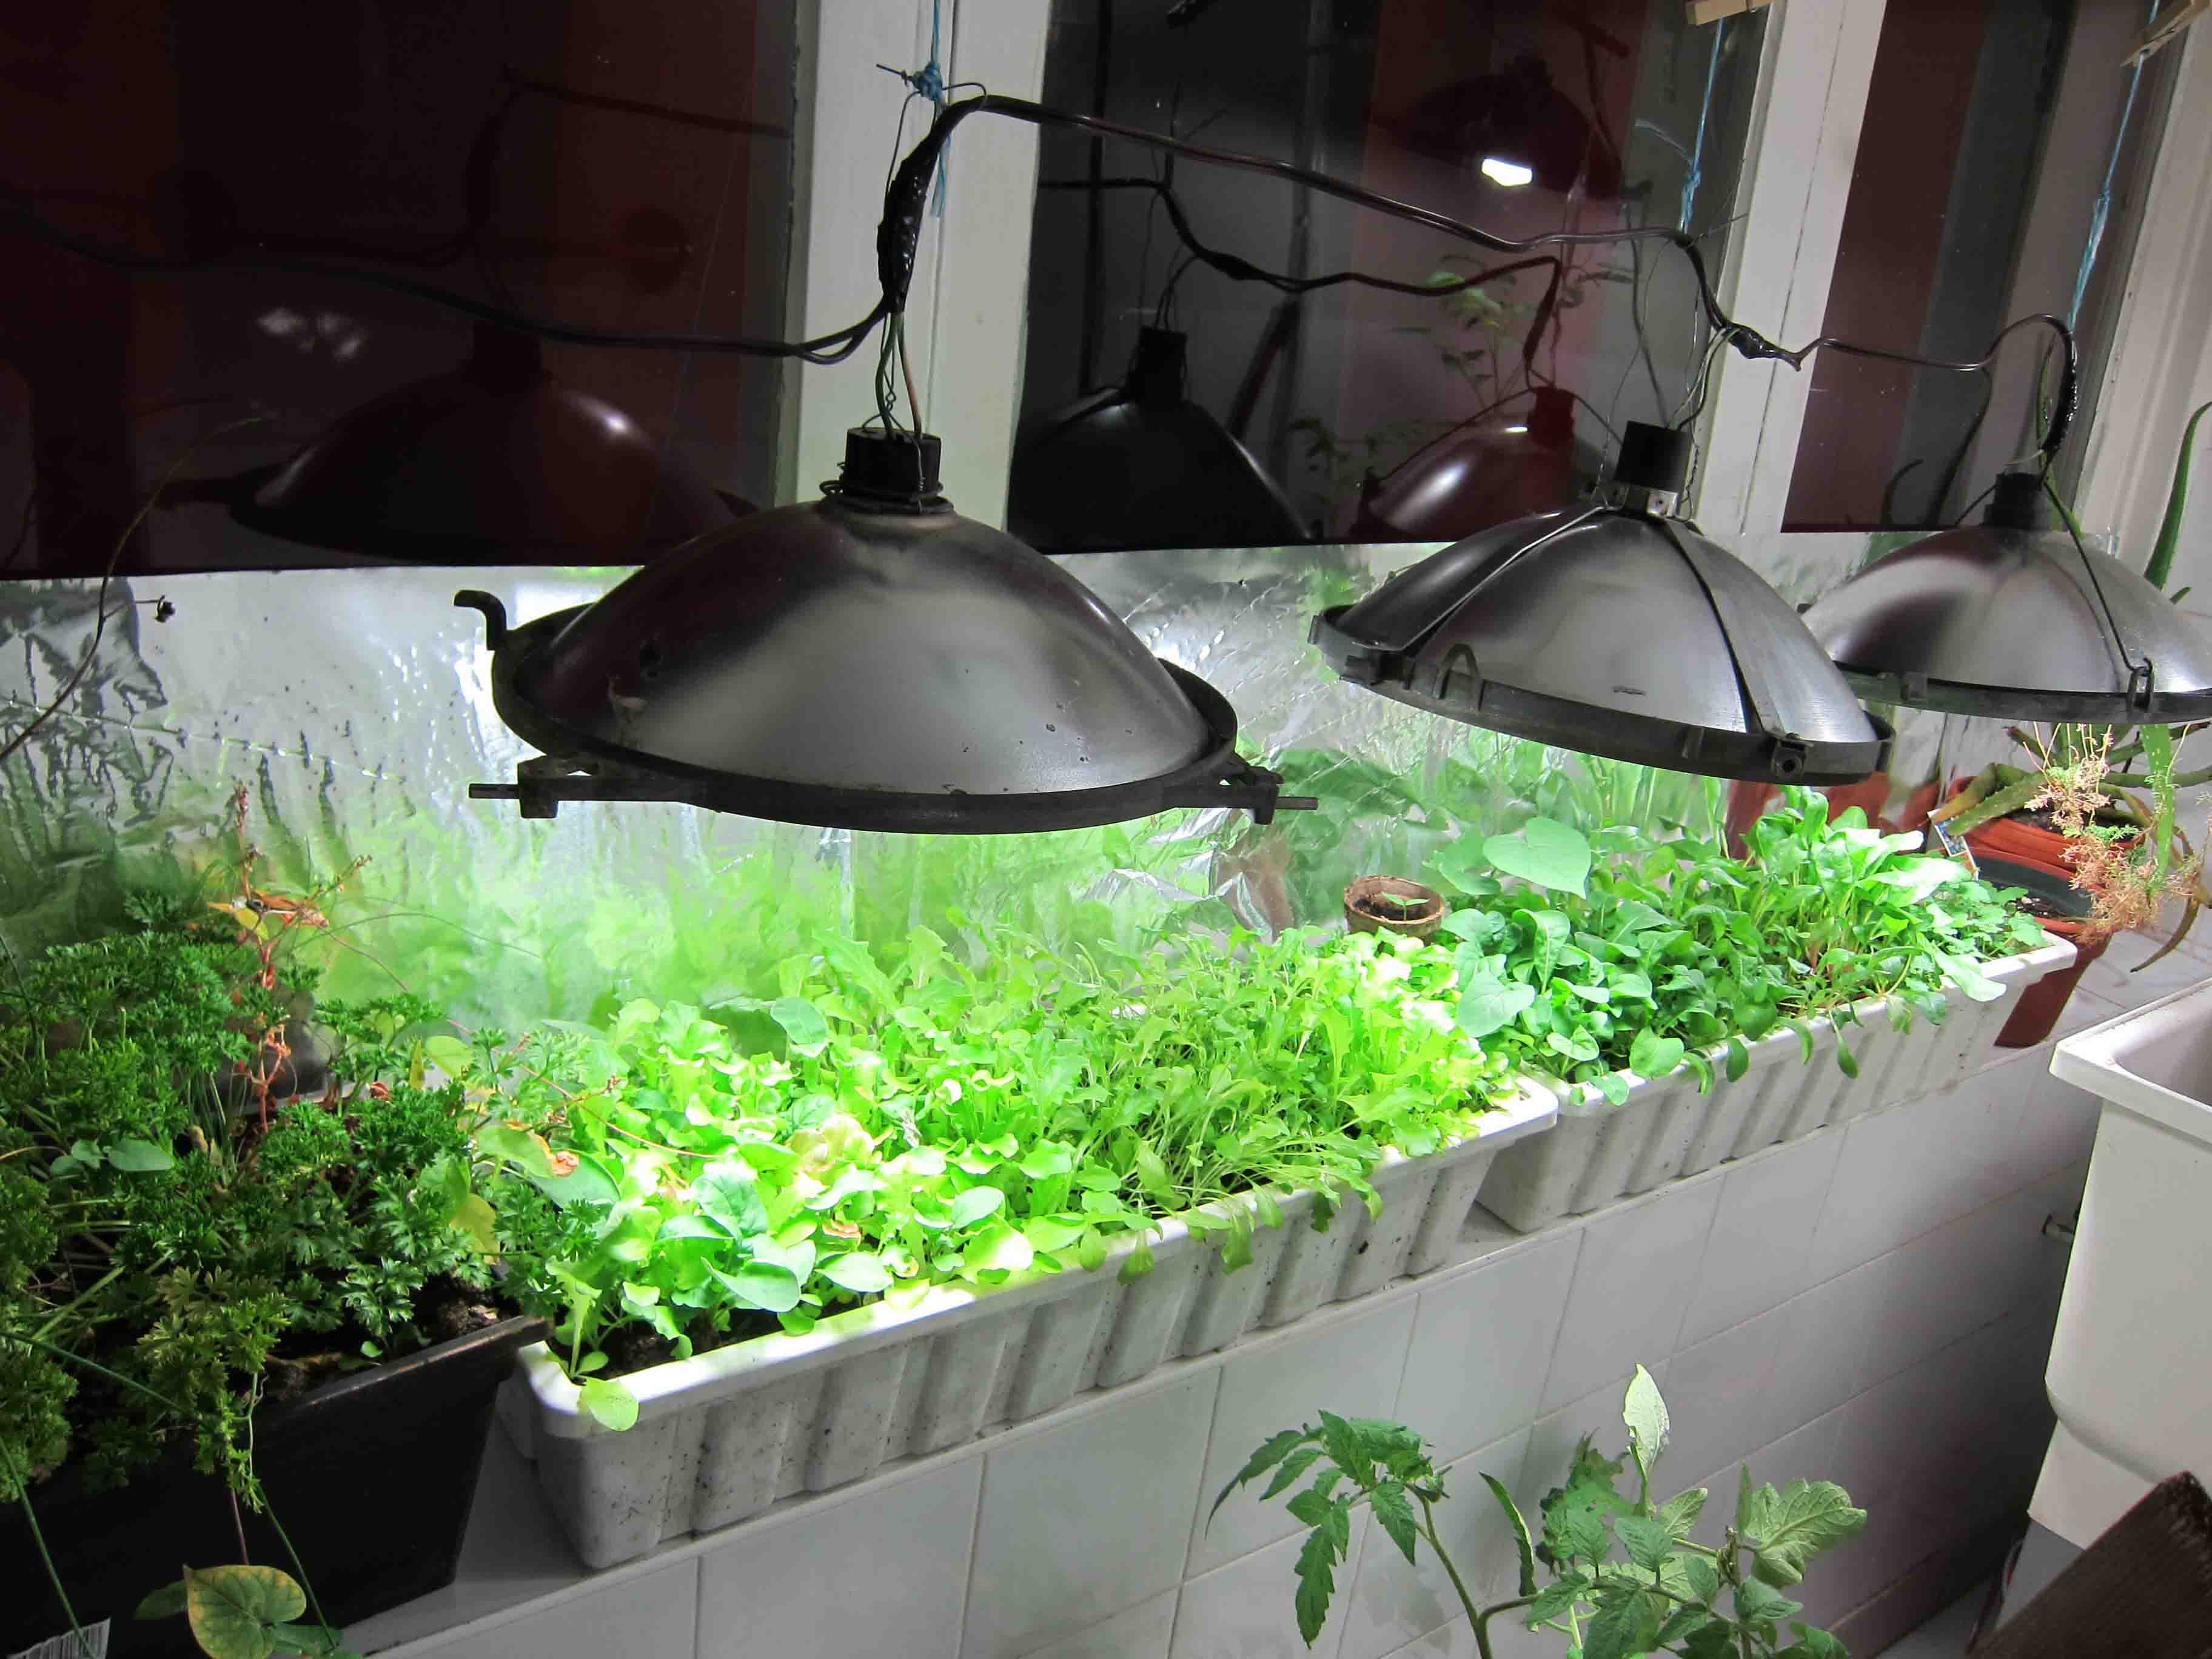 Best ideas about DIY Indoor Gardening
. Save or Pin DIY indoor greenhouse Now.